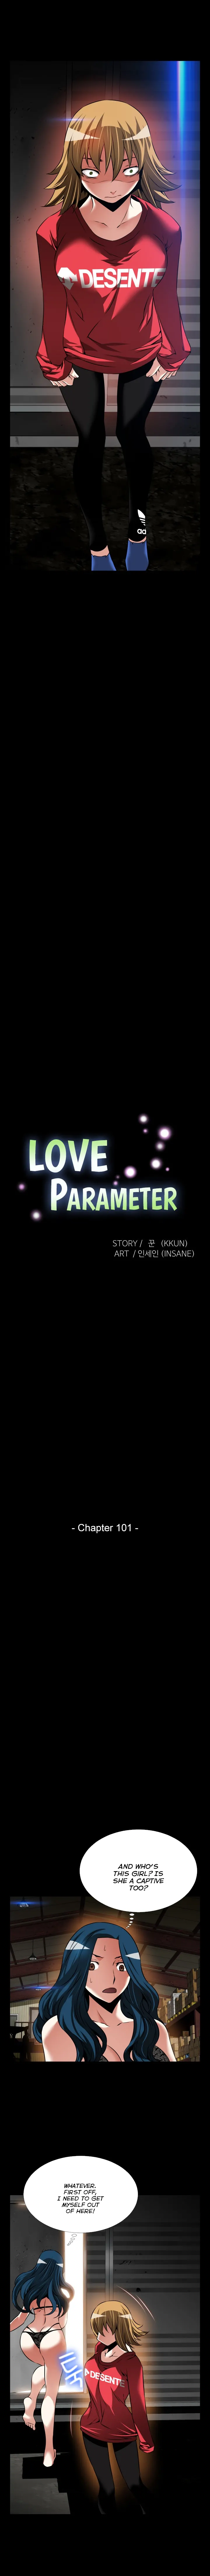 Love Parameter image